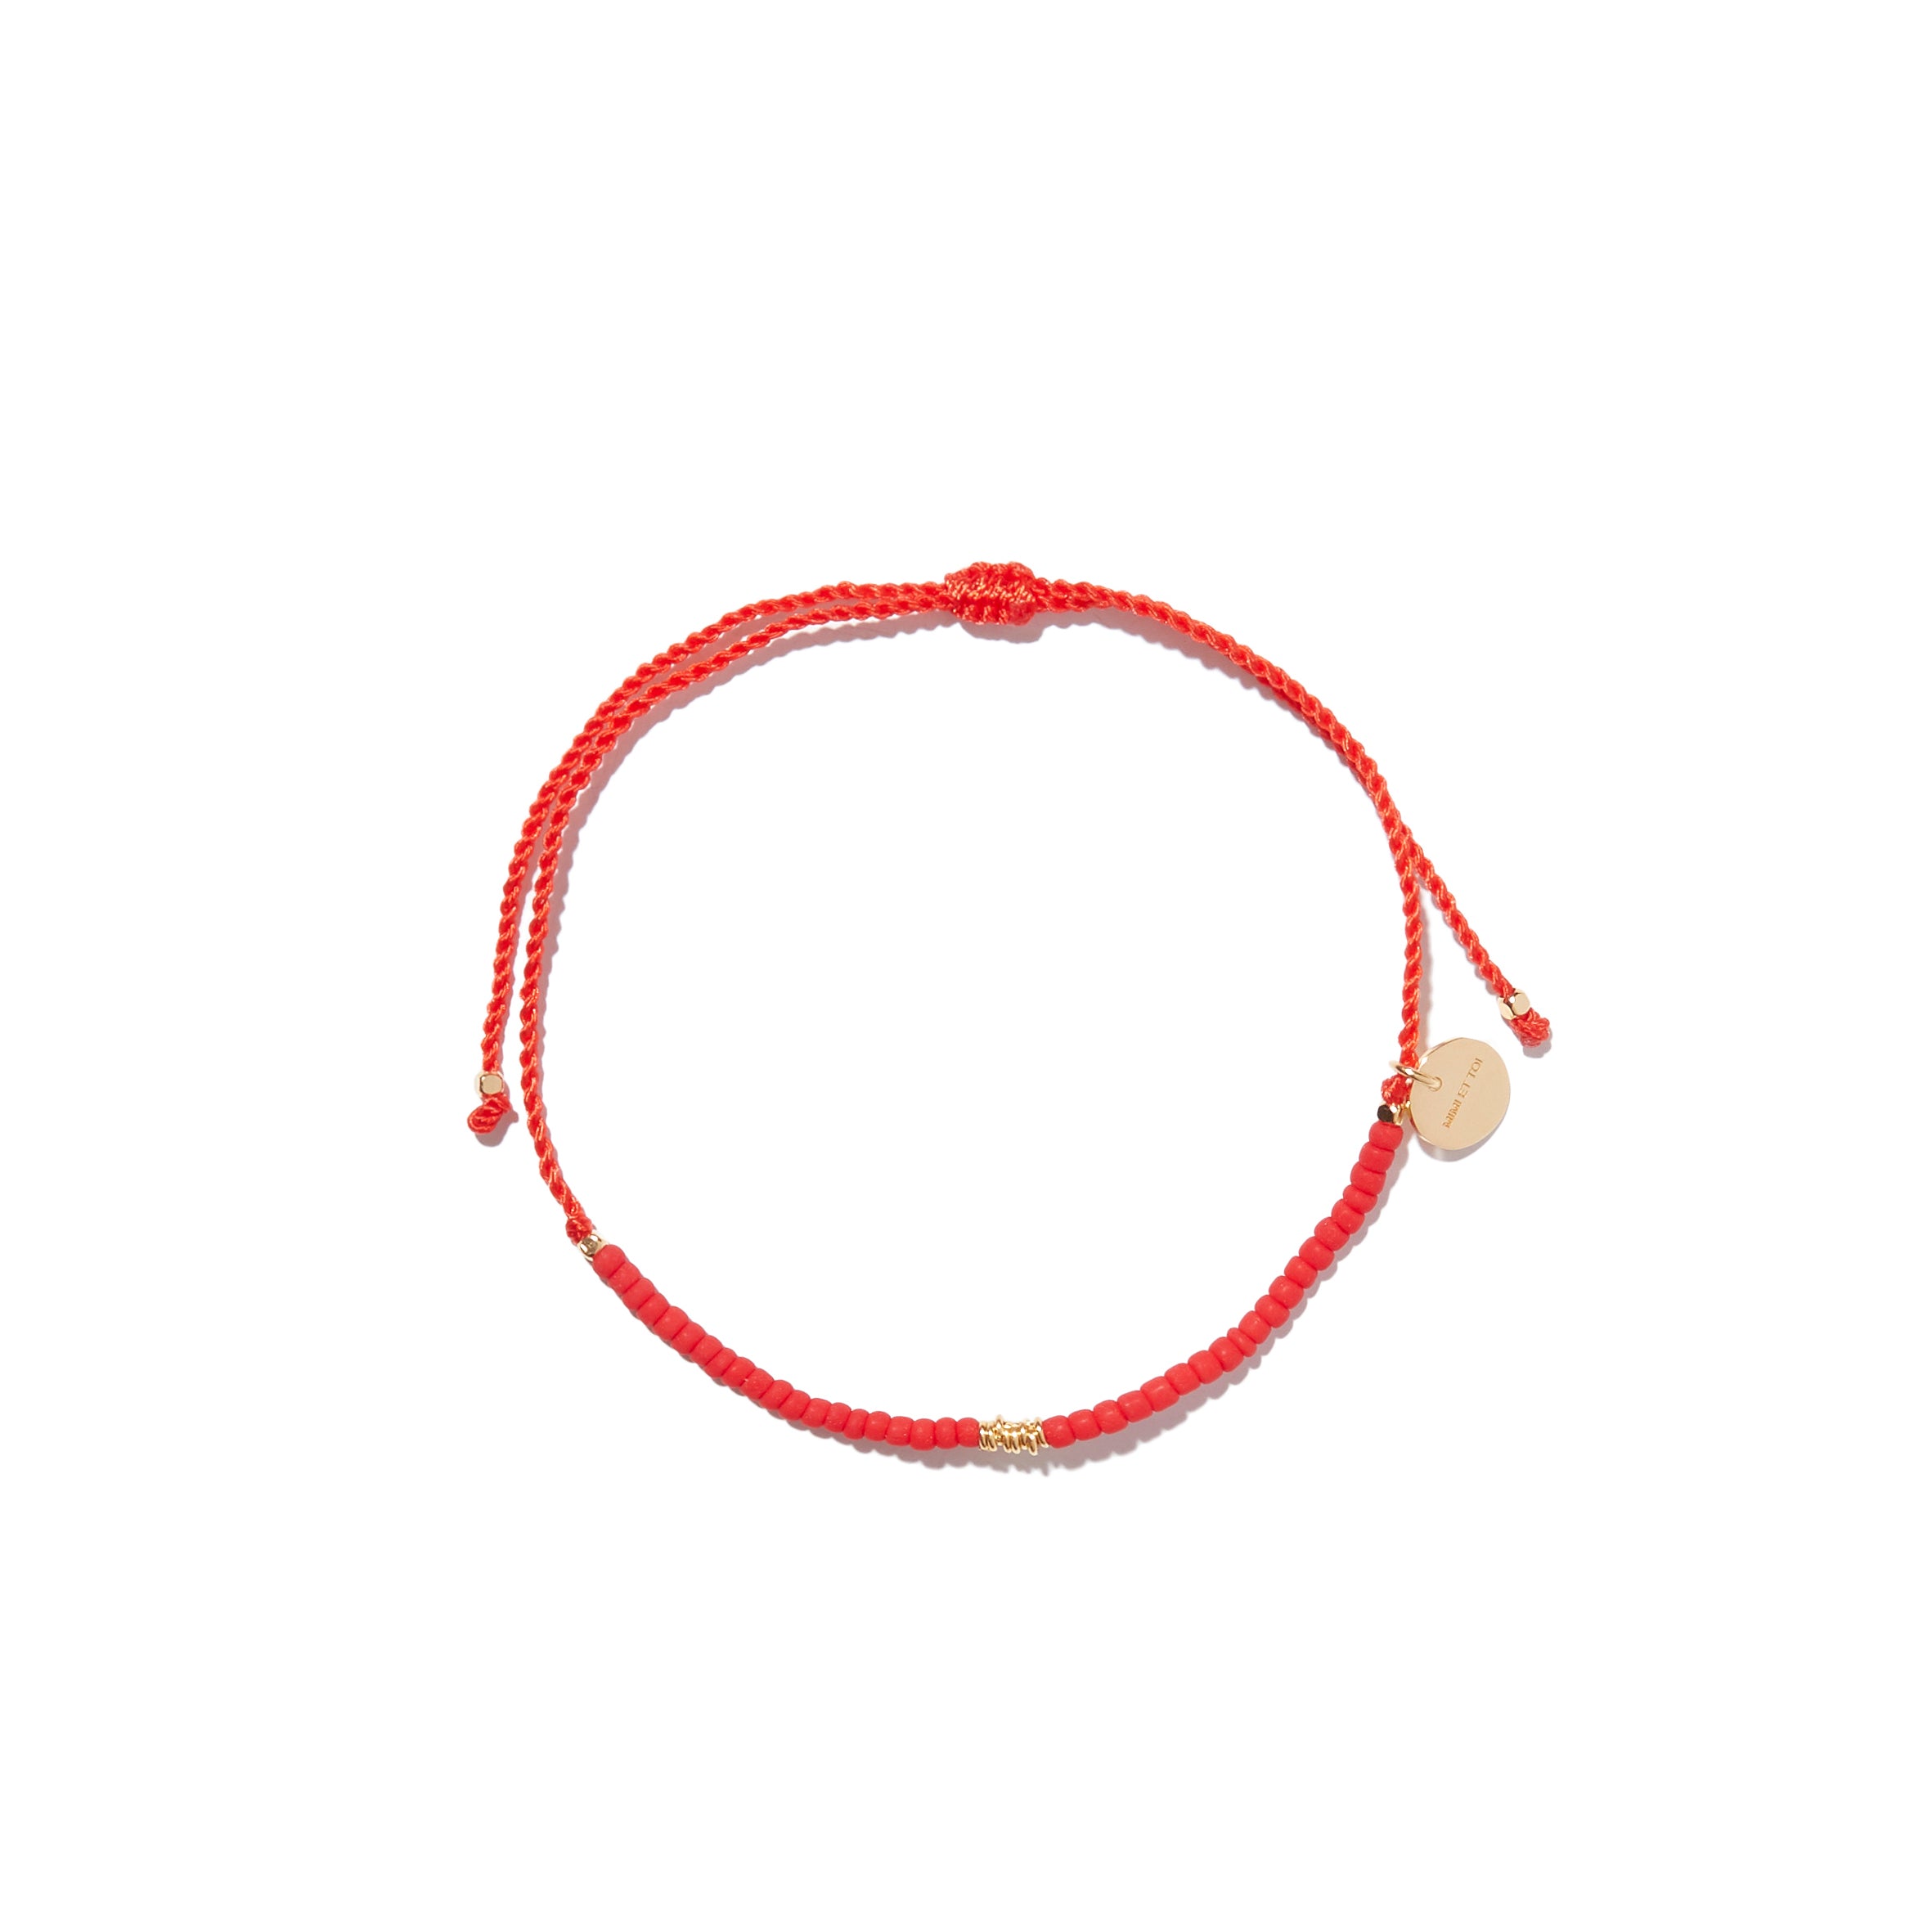 Flori red bracelet